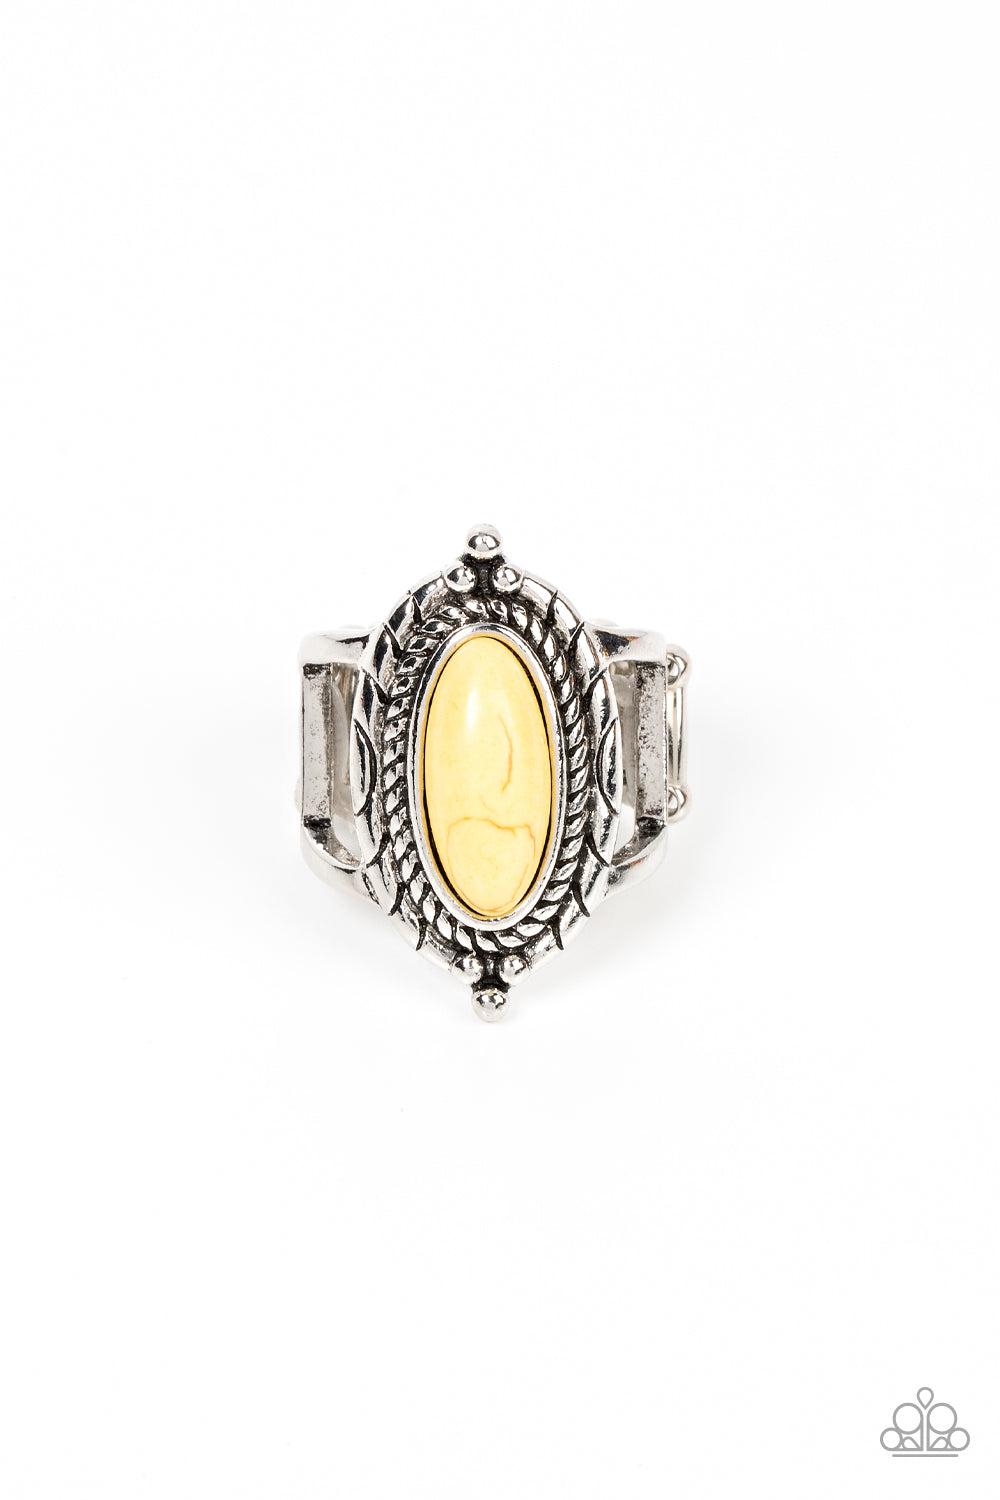 Mojave Metro Yellow Stone Ring - Paparazzi Accessories- lightbox - CarasShop.com - $5 Jewelry by Cara Jewels